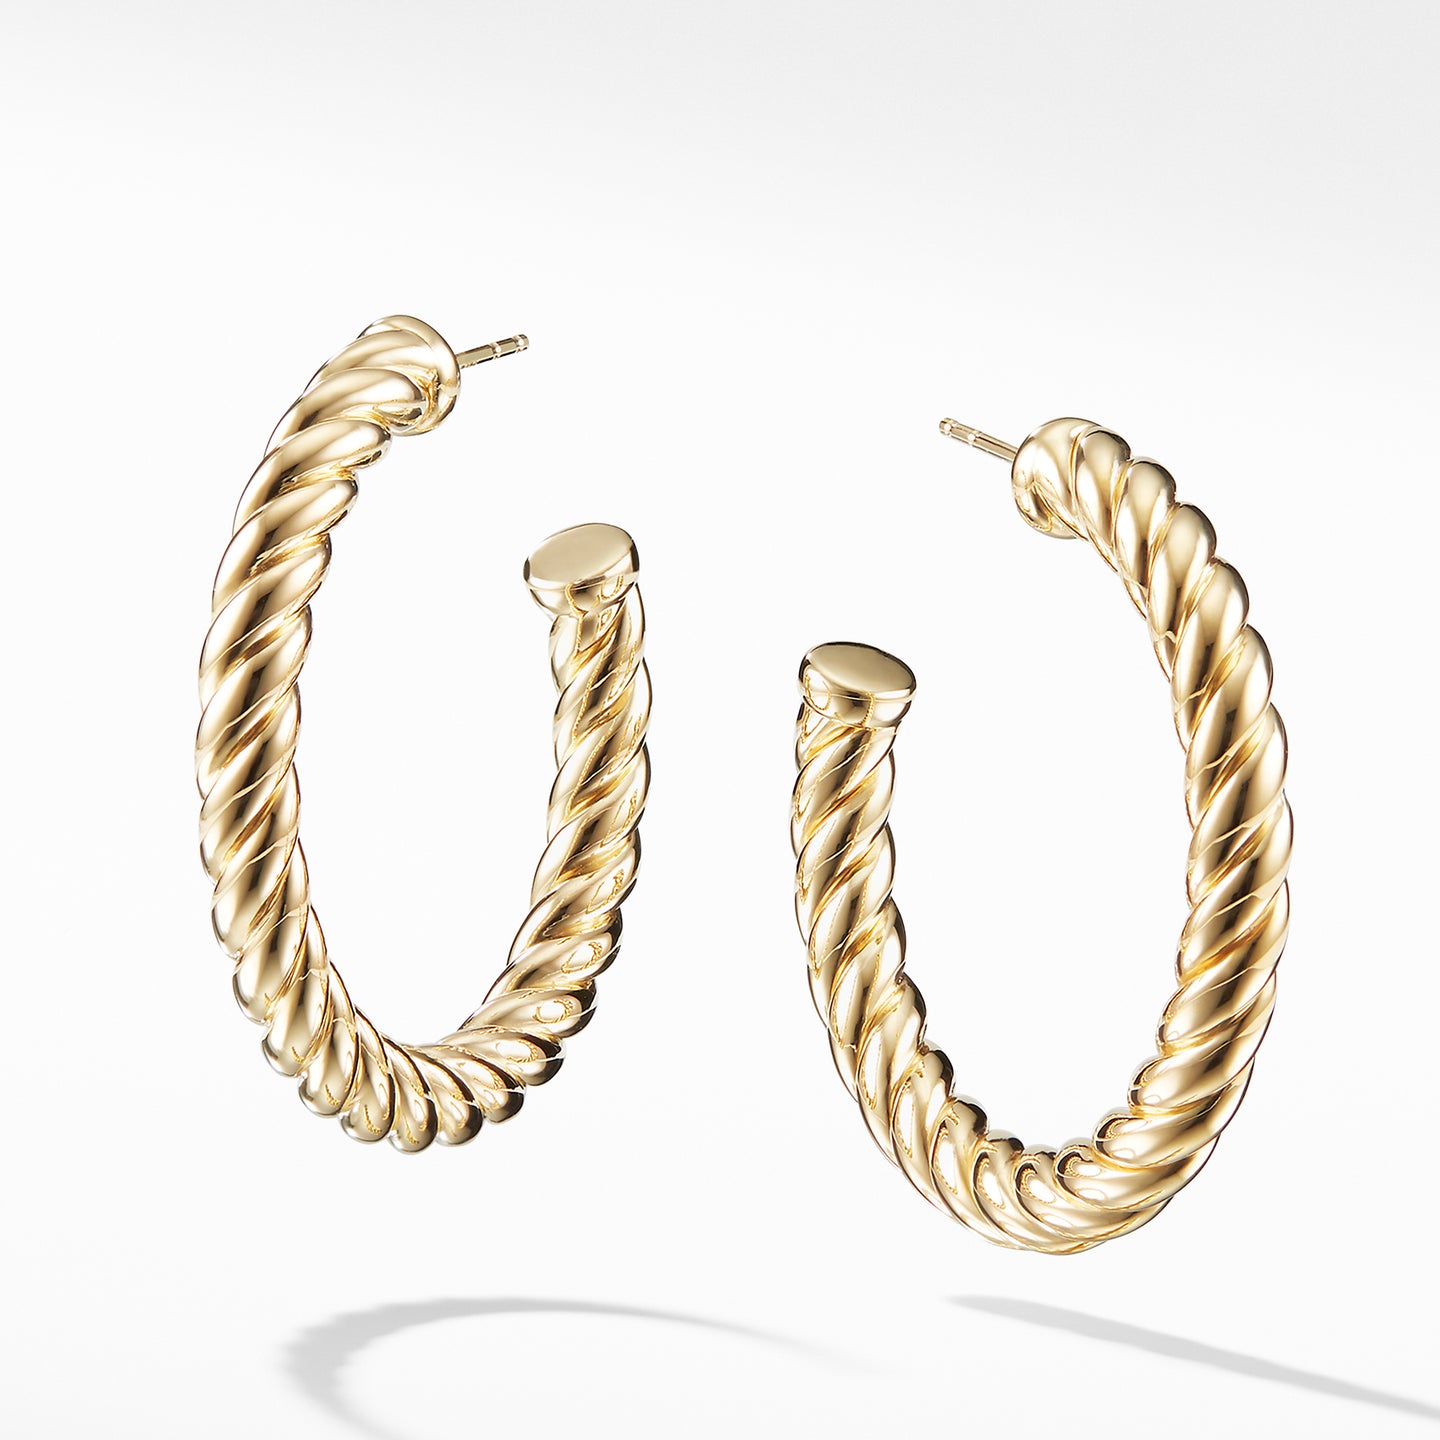 David Yurman Cable Classics Hoop Earrings in 18K Yellow Gold